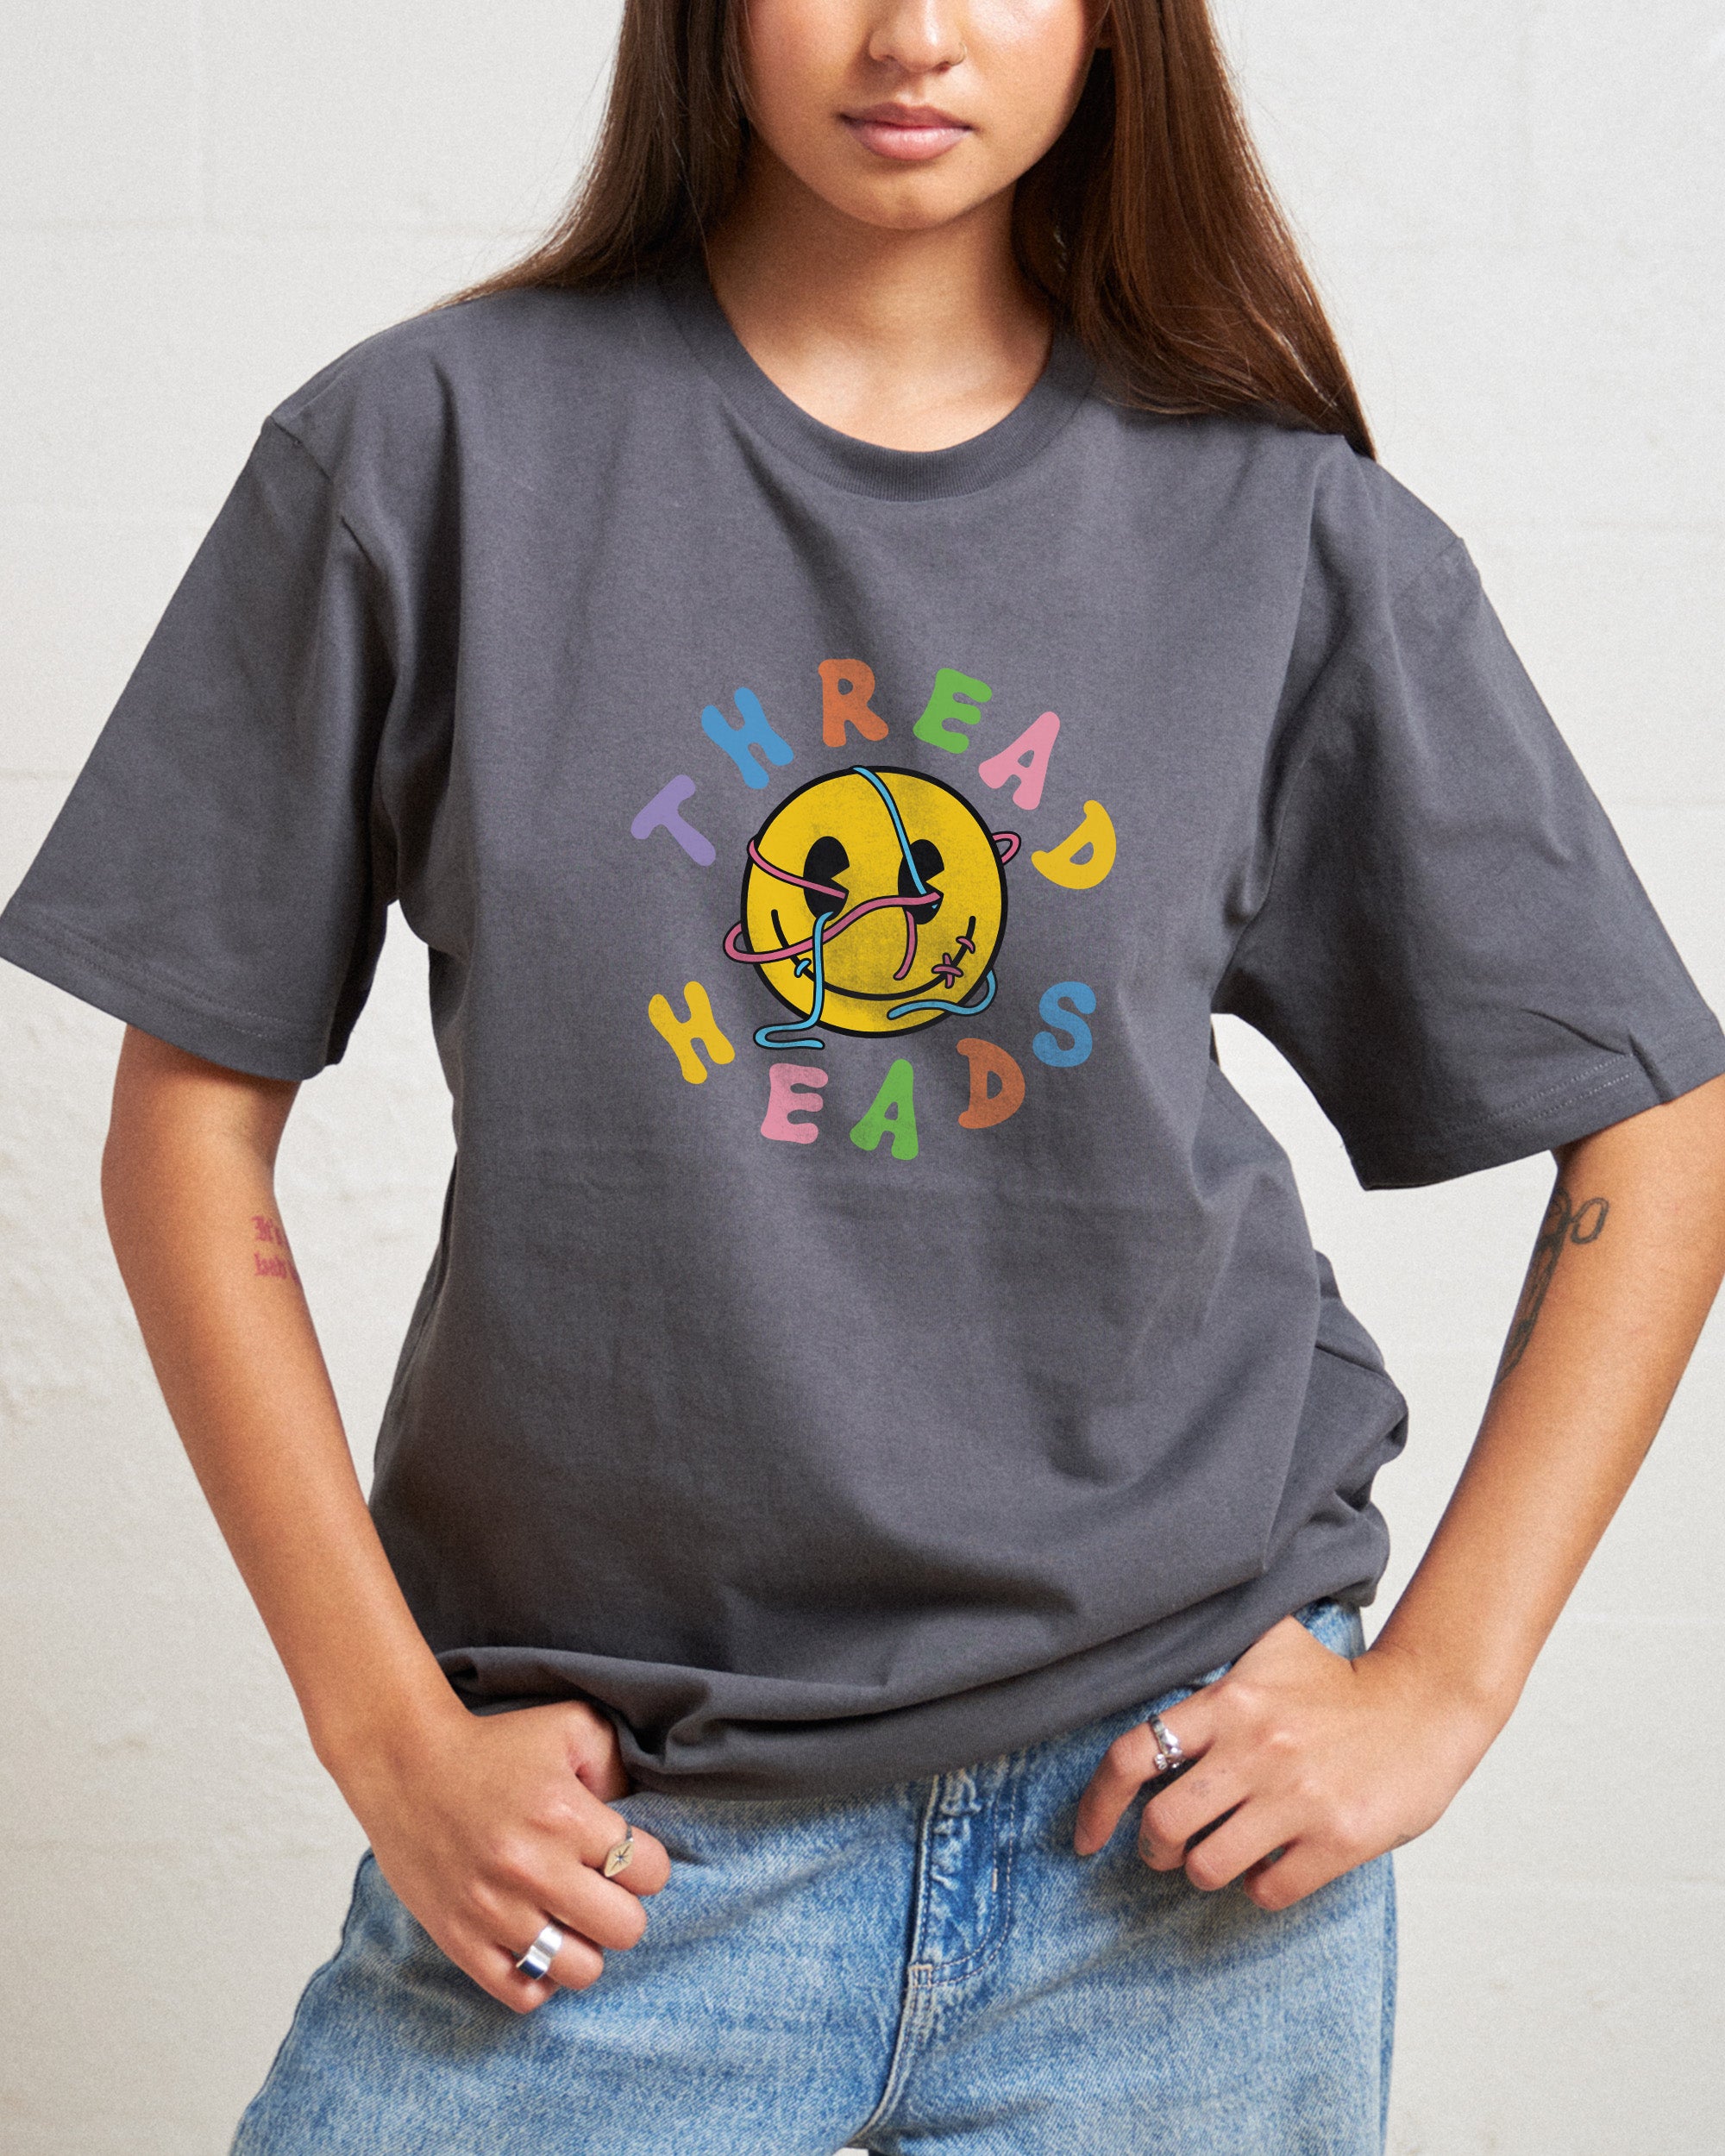 Thread Heads T-Shirt Australia Online